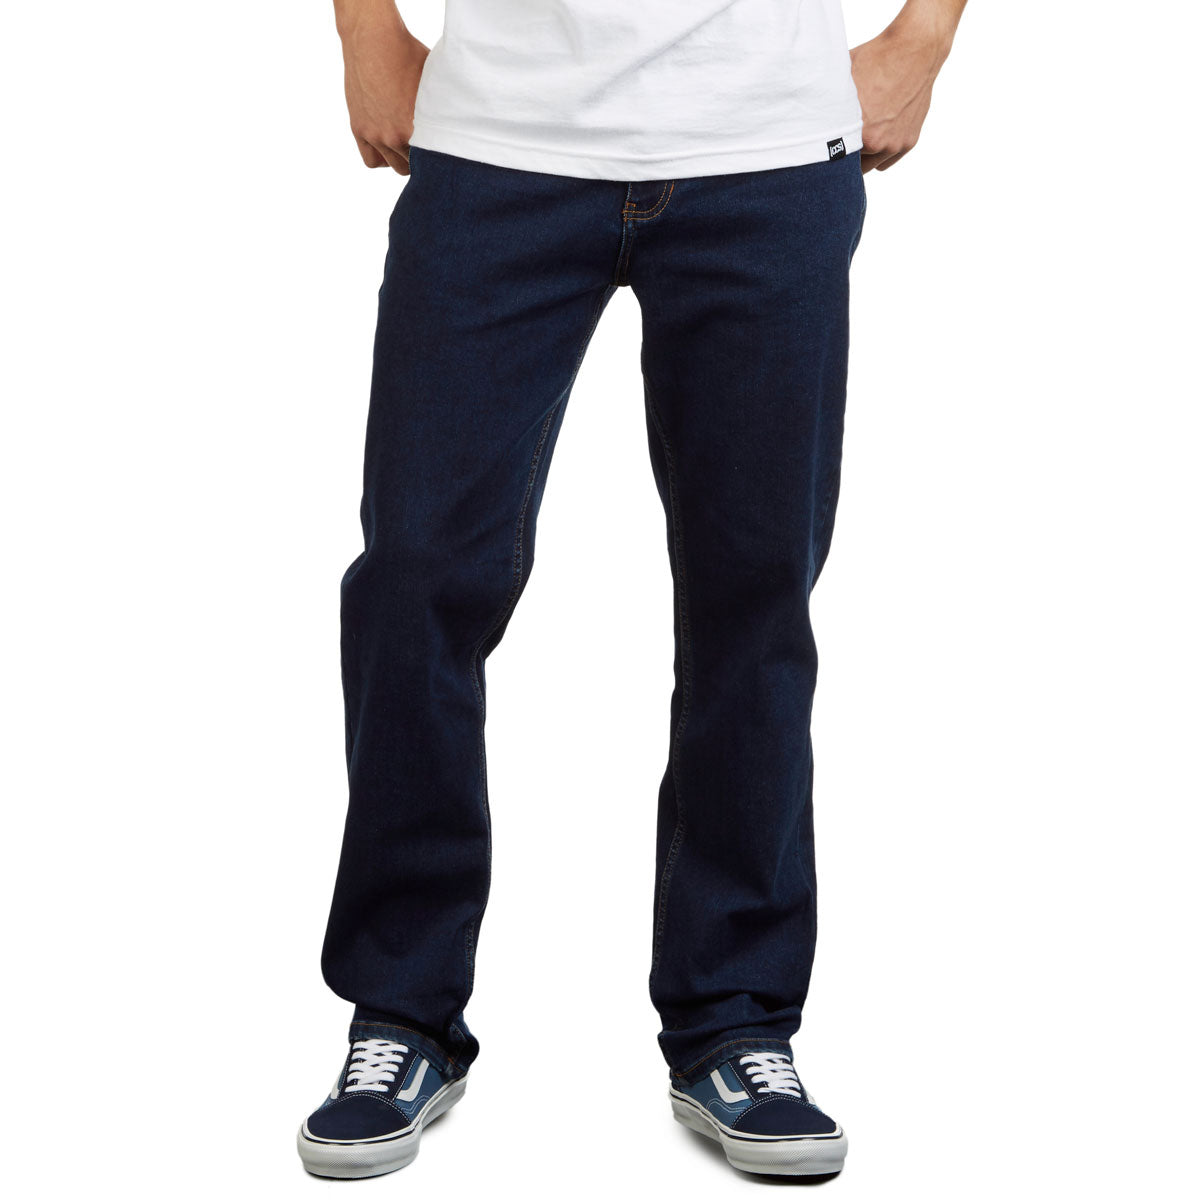 CCS Standard Plus Relaxed Denim Jeans - Indigo image 1